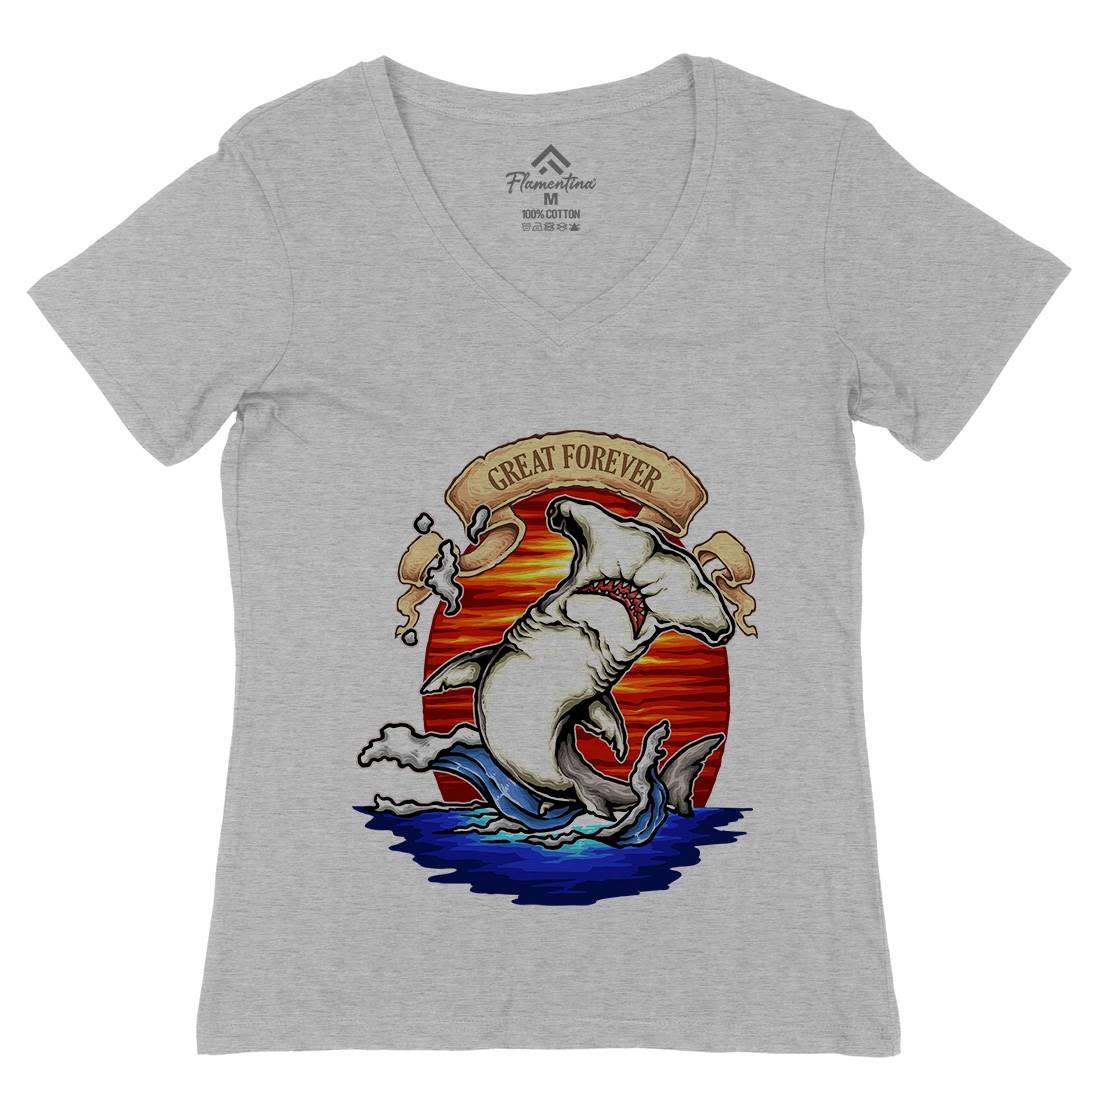 King Of The Ocean Womens Organic V-Neck T-Shirt Navy A430